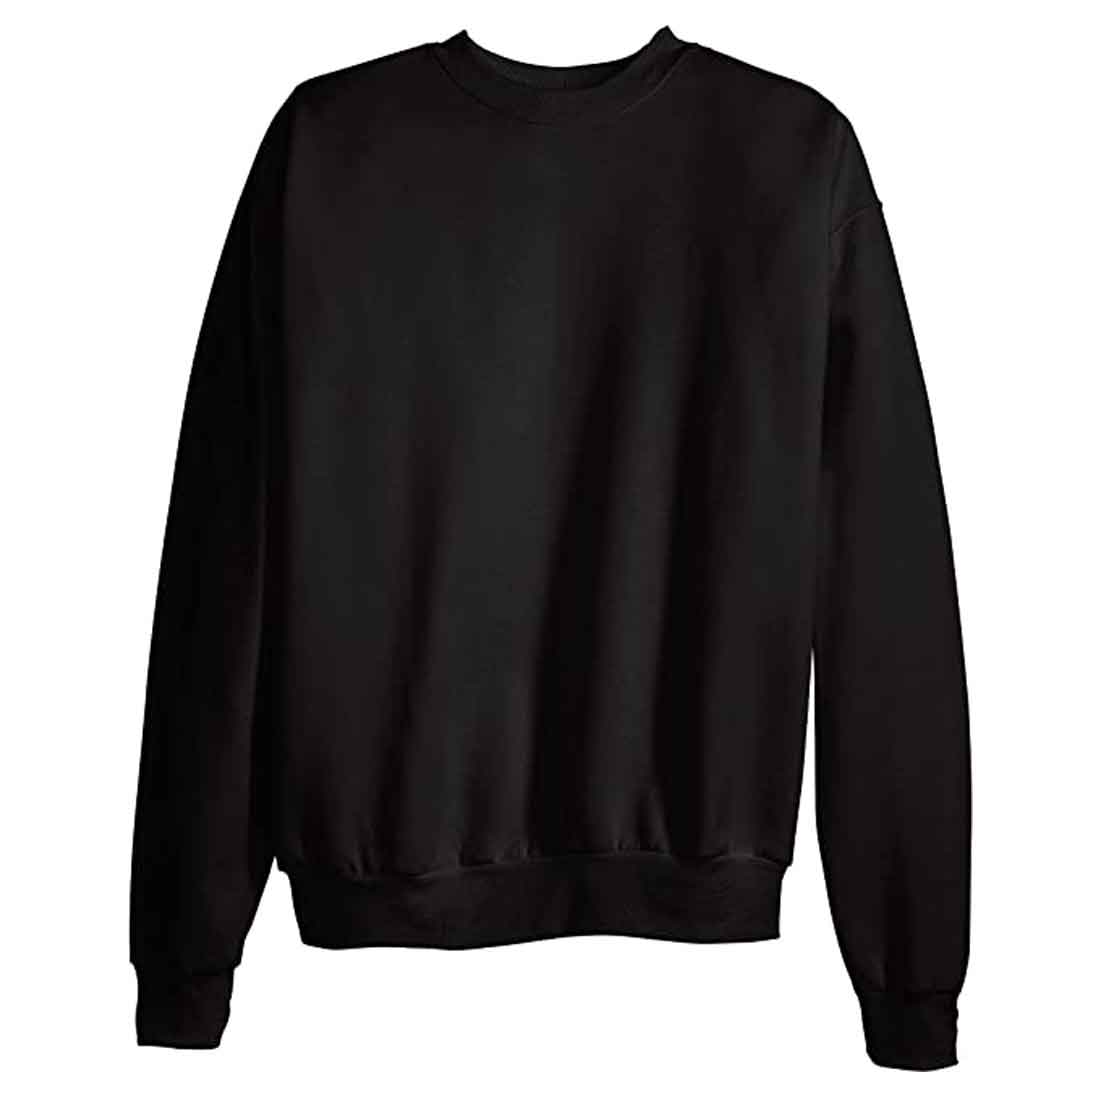 Plain Black Sweatshirt for Men Regular Use - Libran